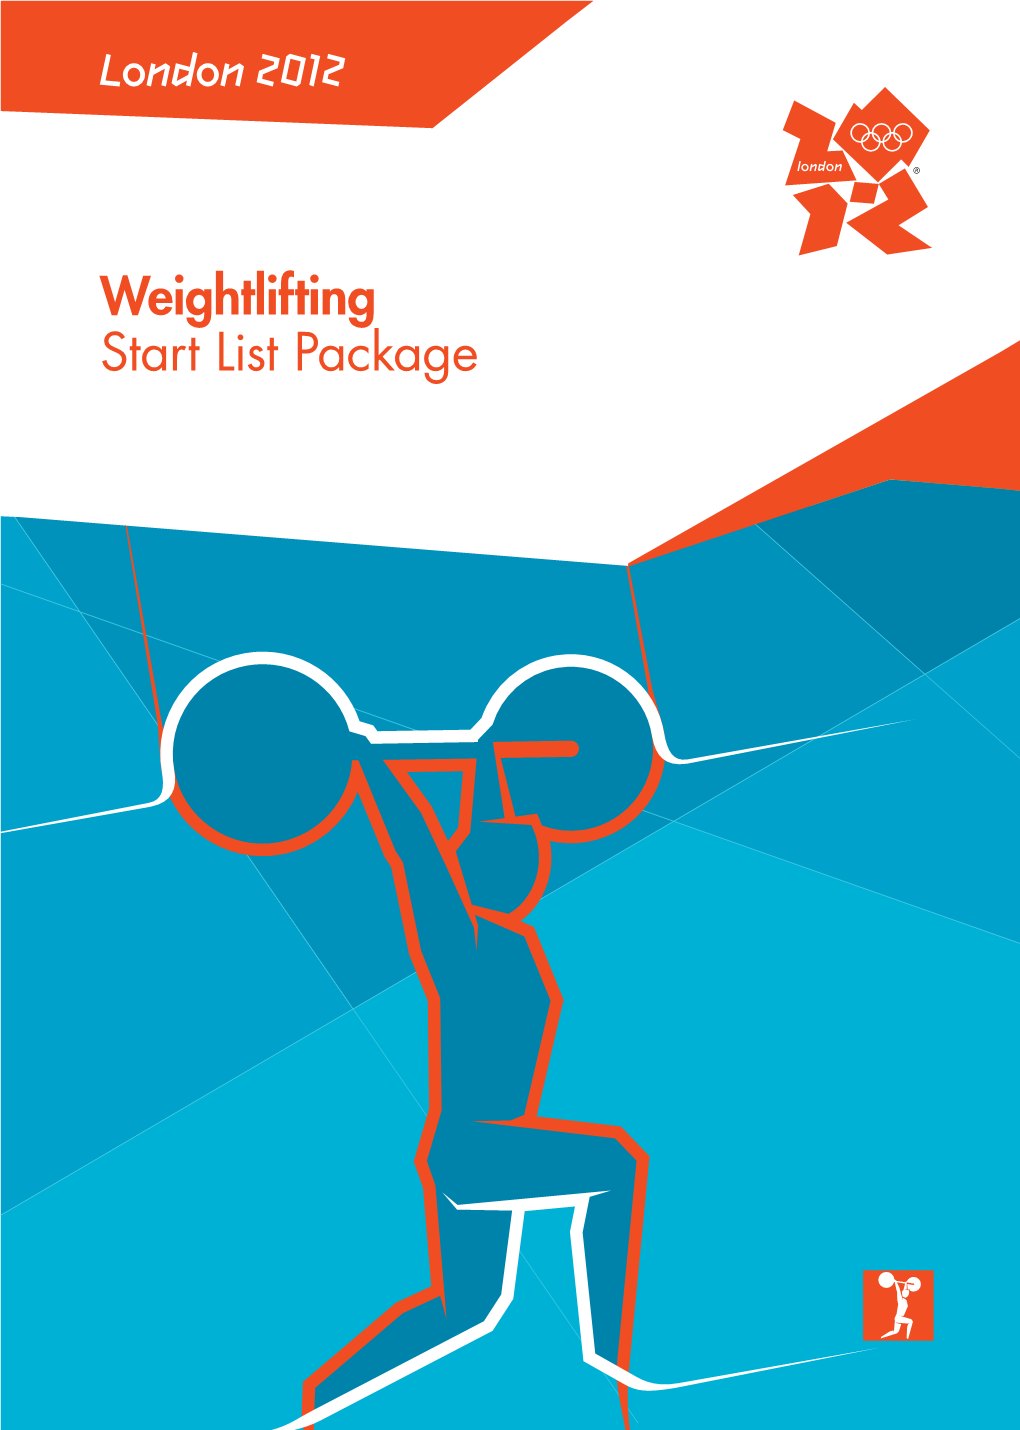 London 2012 Weightlifting Start List Package